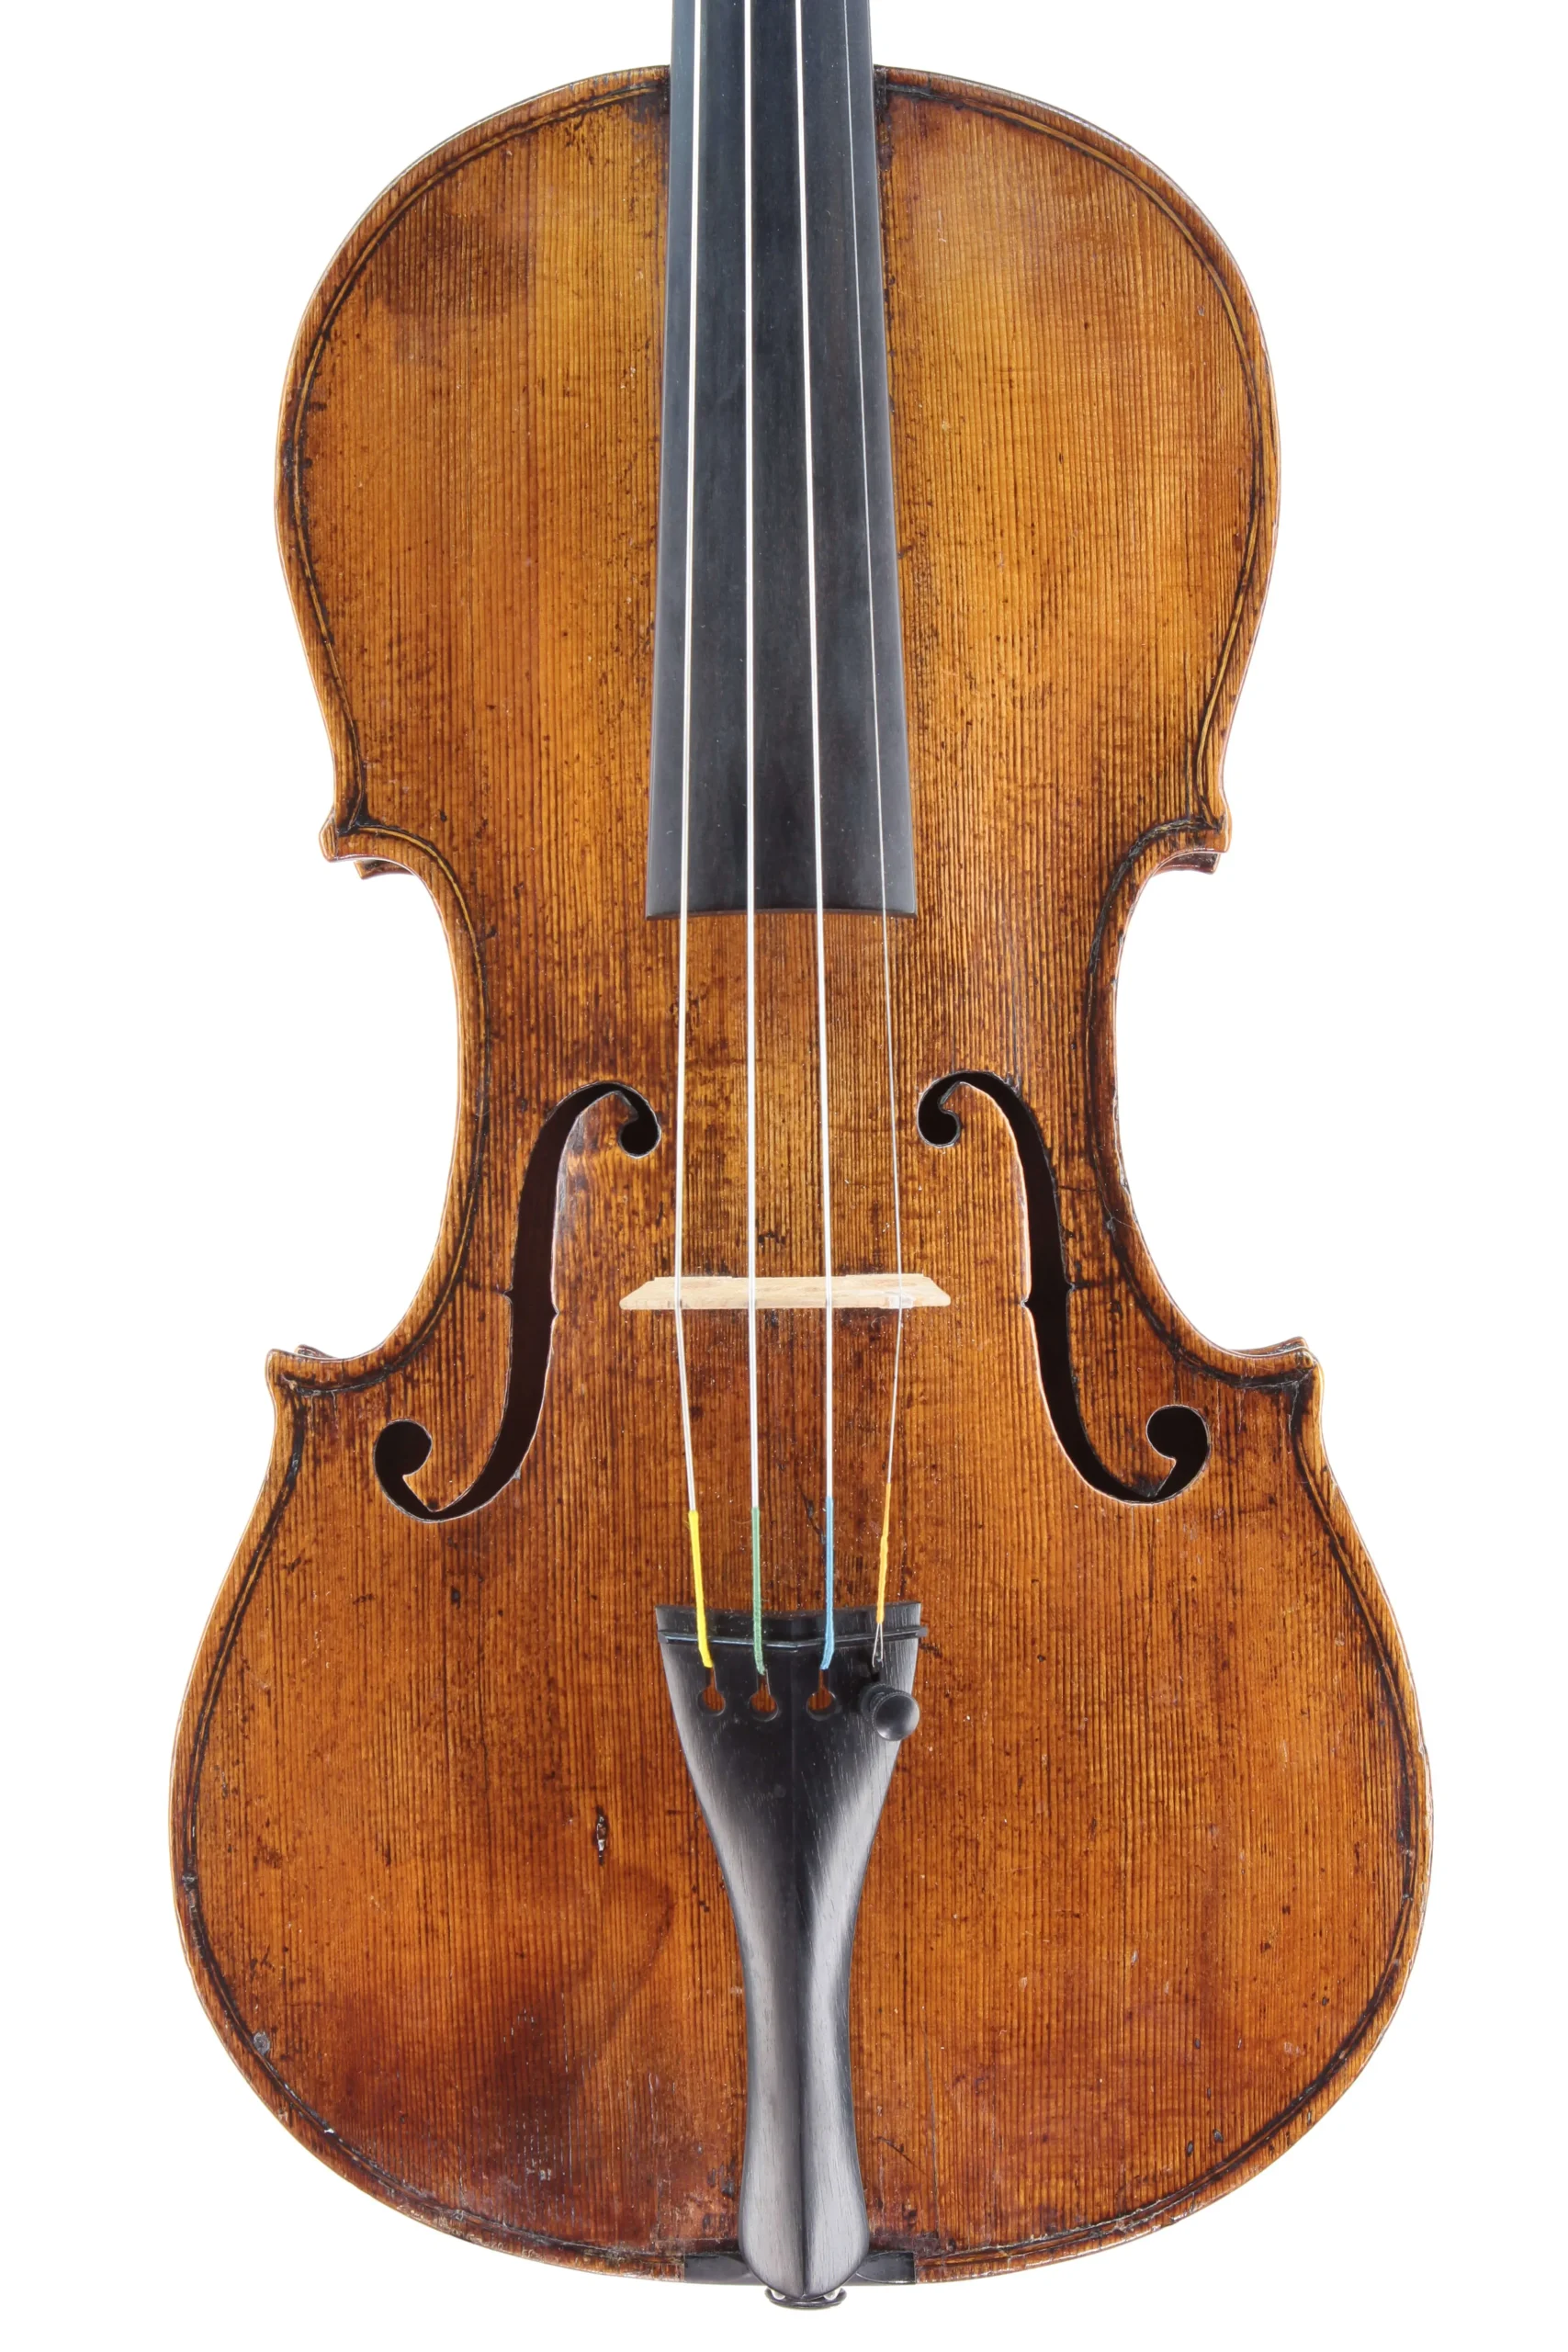 testore violin - How much is a Testore violin worth